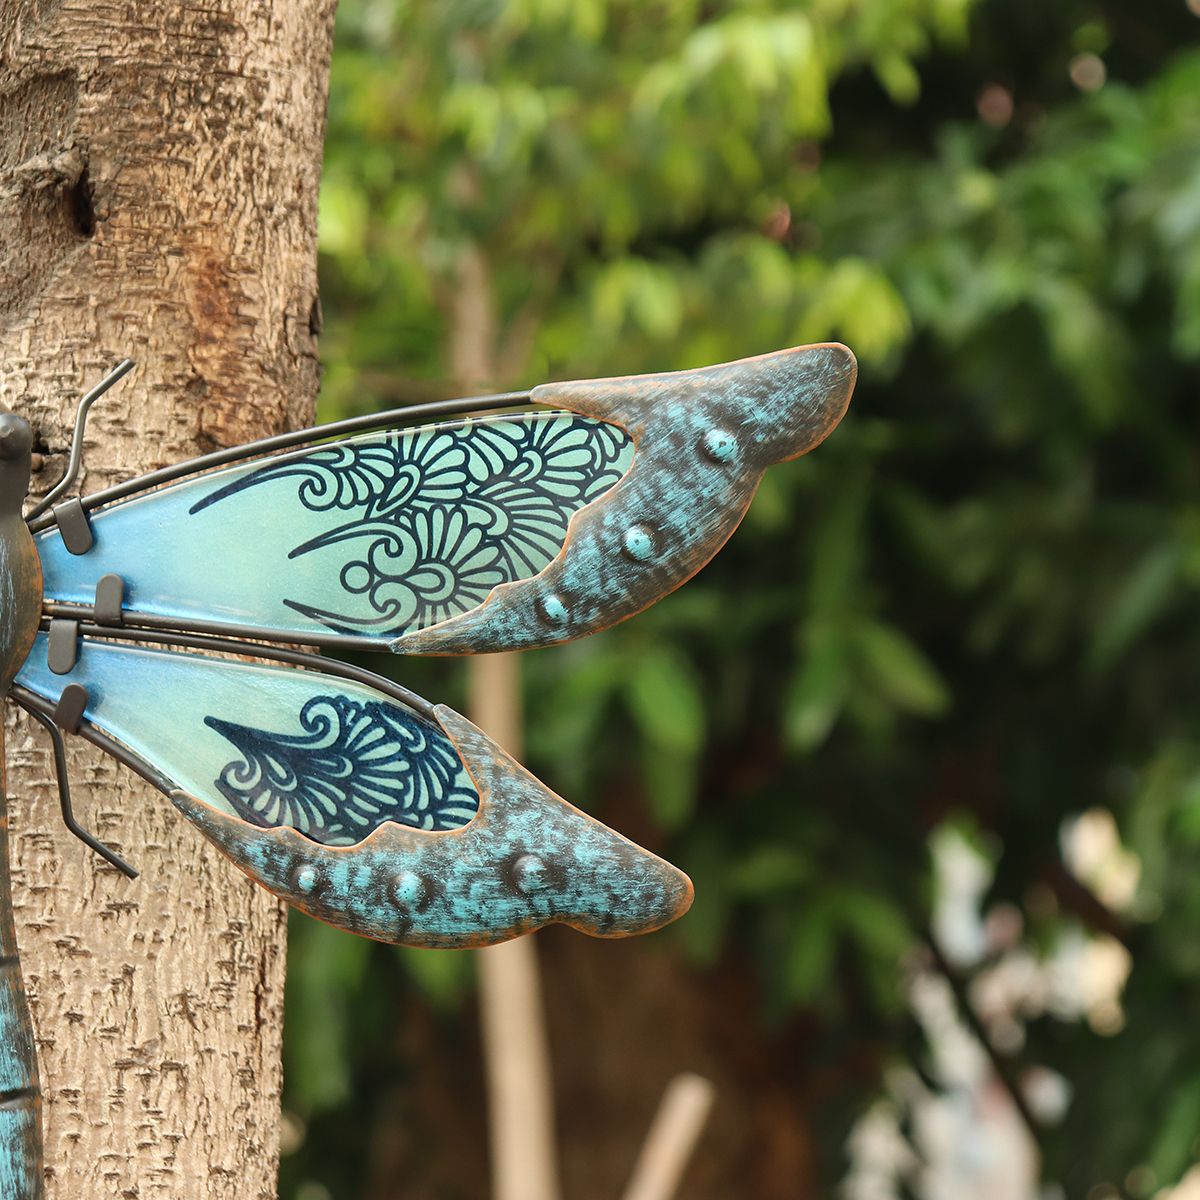 Metal Dragonfly 3d Wall Art Garden Sculpture Decoration Fence Ornaments Throughout Dragonflies Wall Art (View 4 of 15)